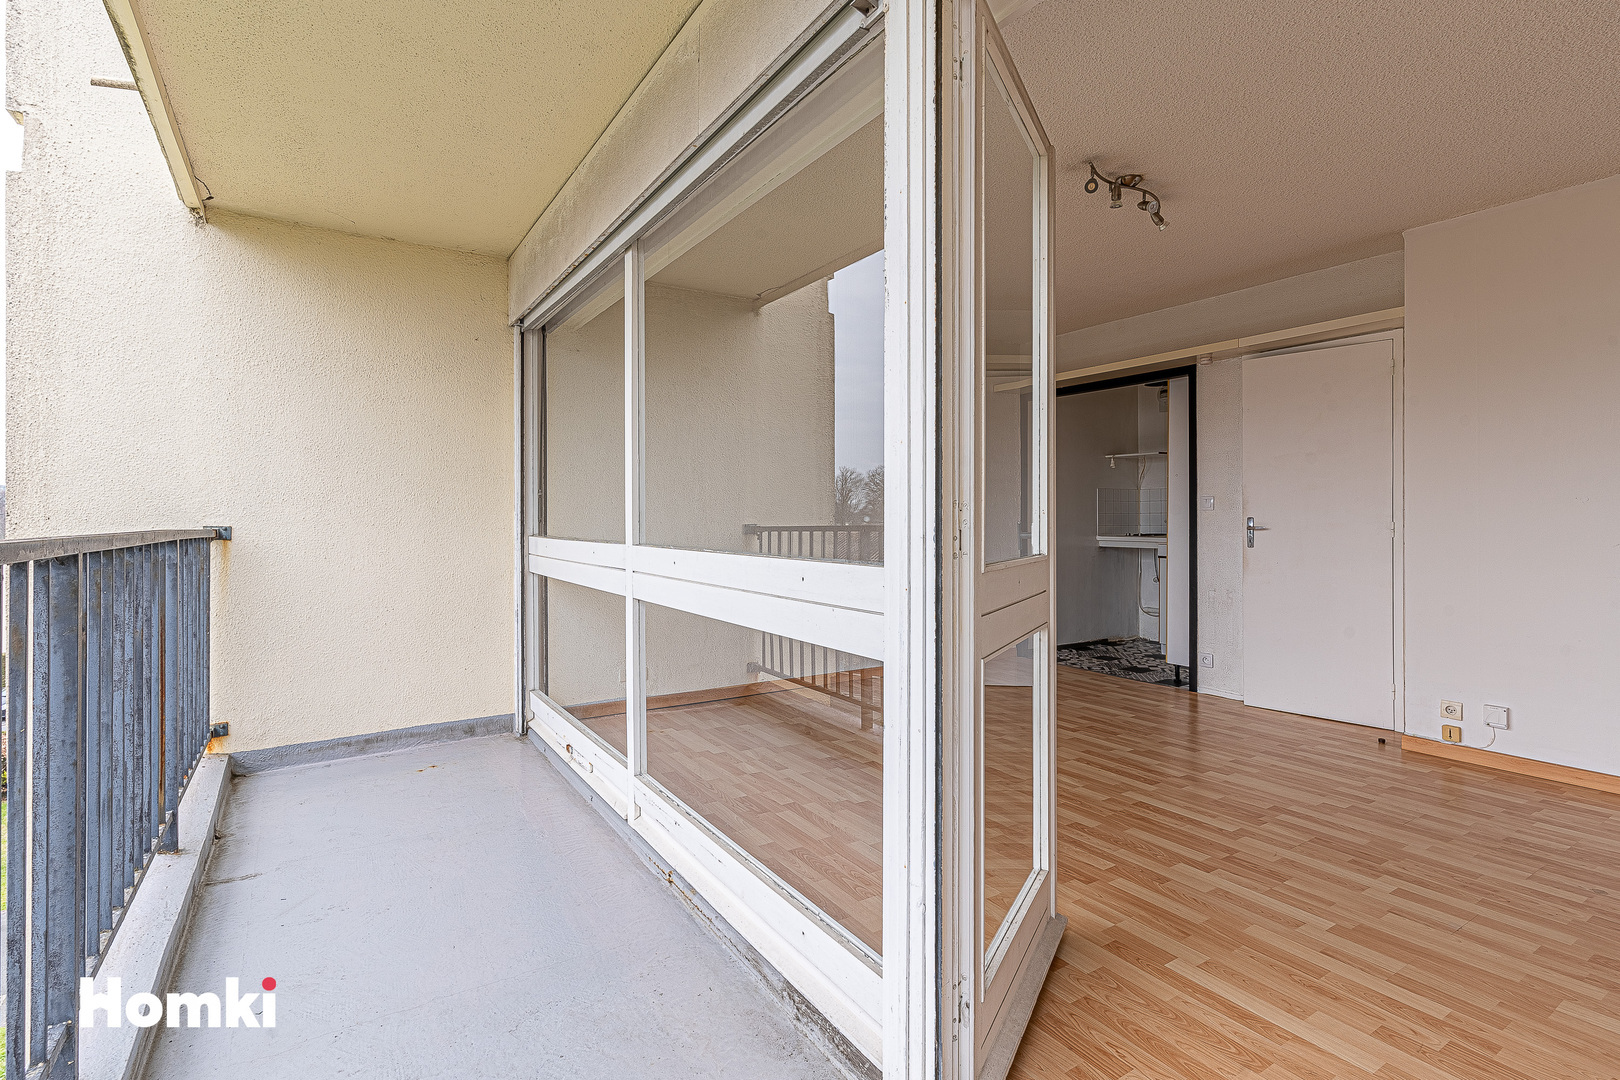 Homki - Vente Appartement  de 27.0 m² à Pessac 33600